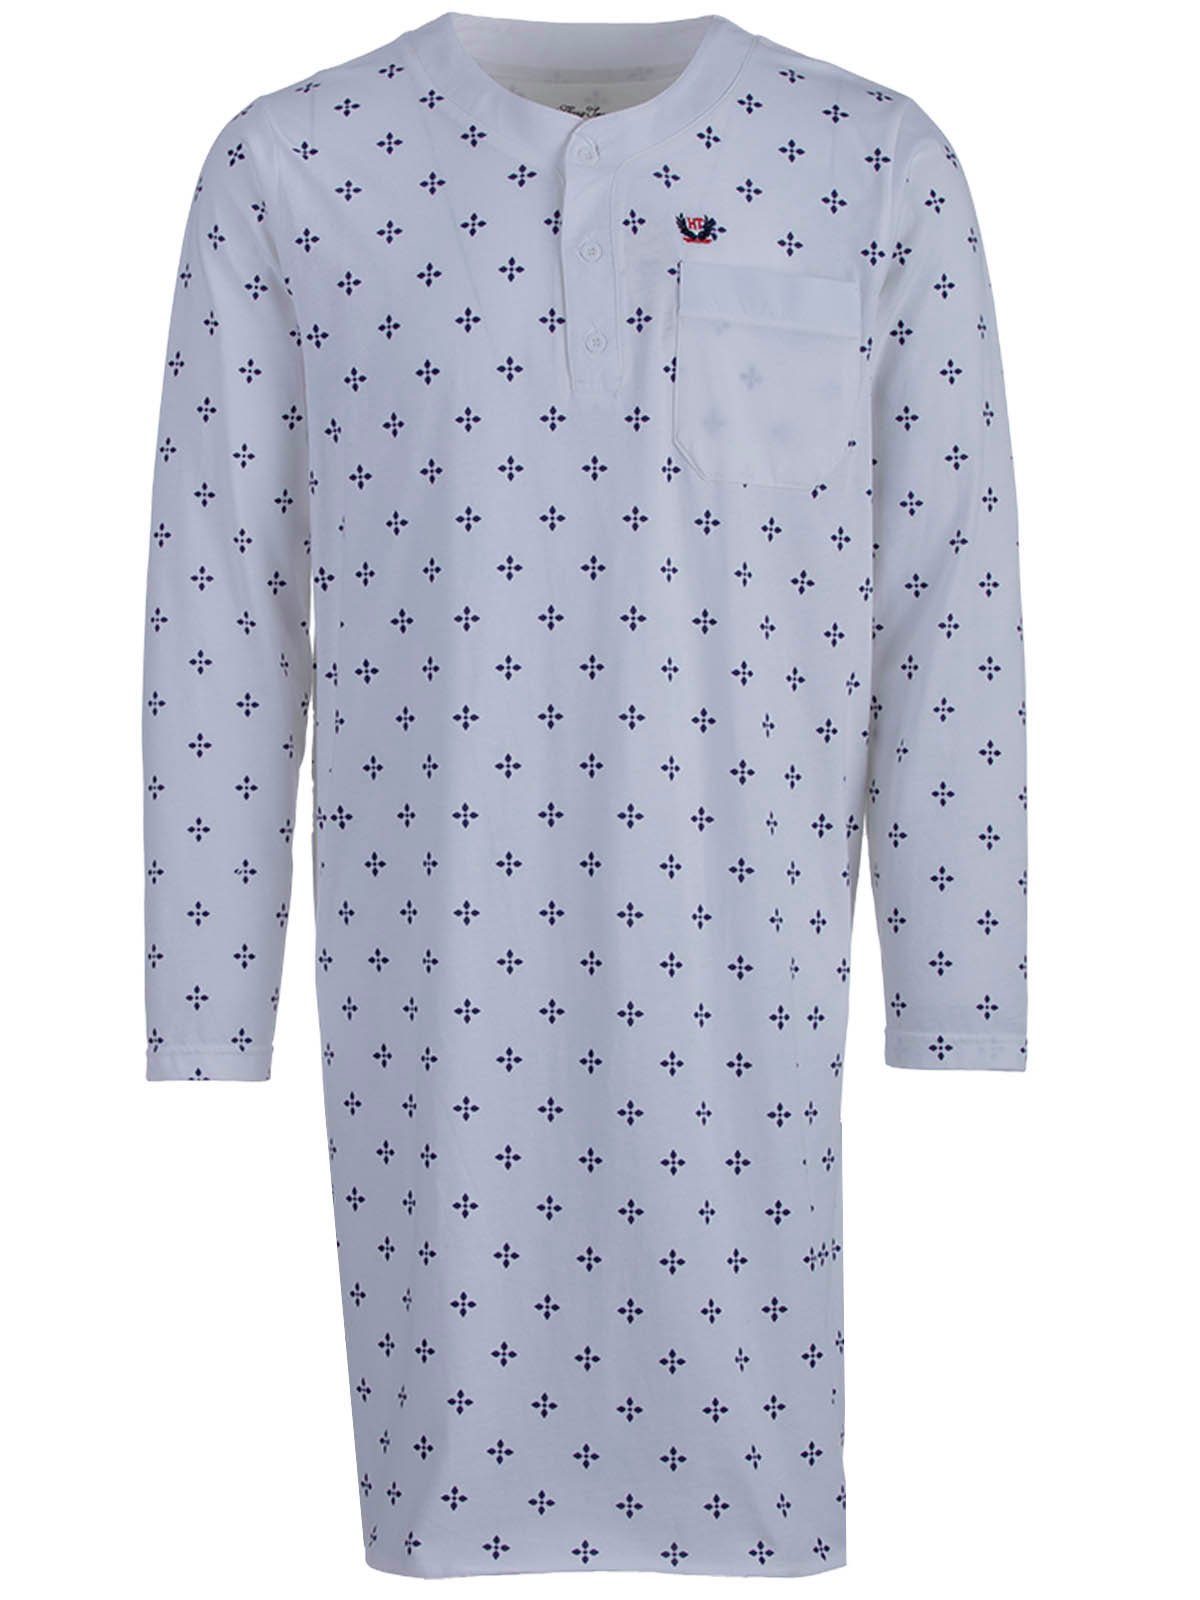 Henry Terre Nachthemd Nachthemd Langarm - Kreuz weiß